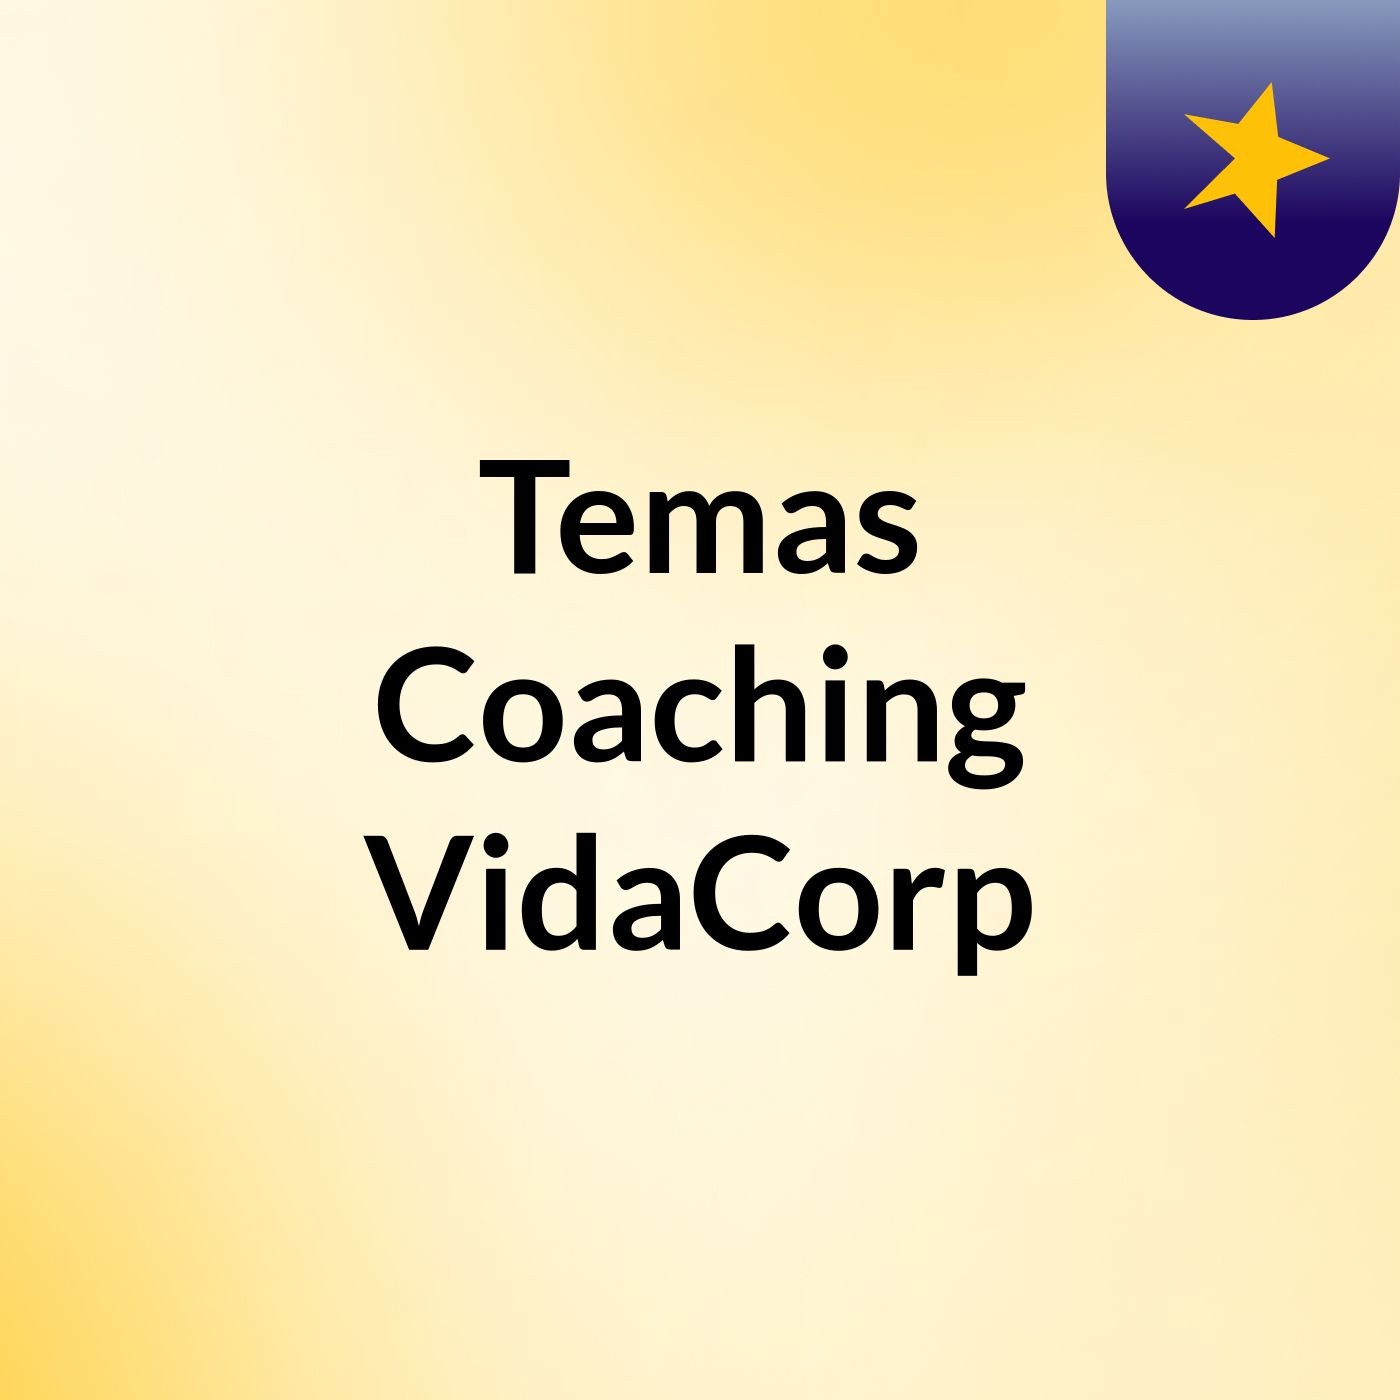 Temas Coaching VidaCorp